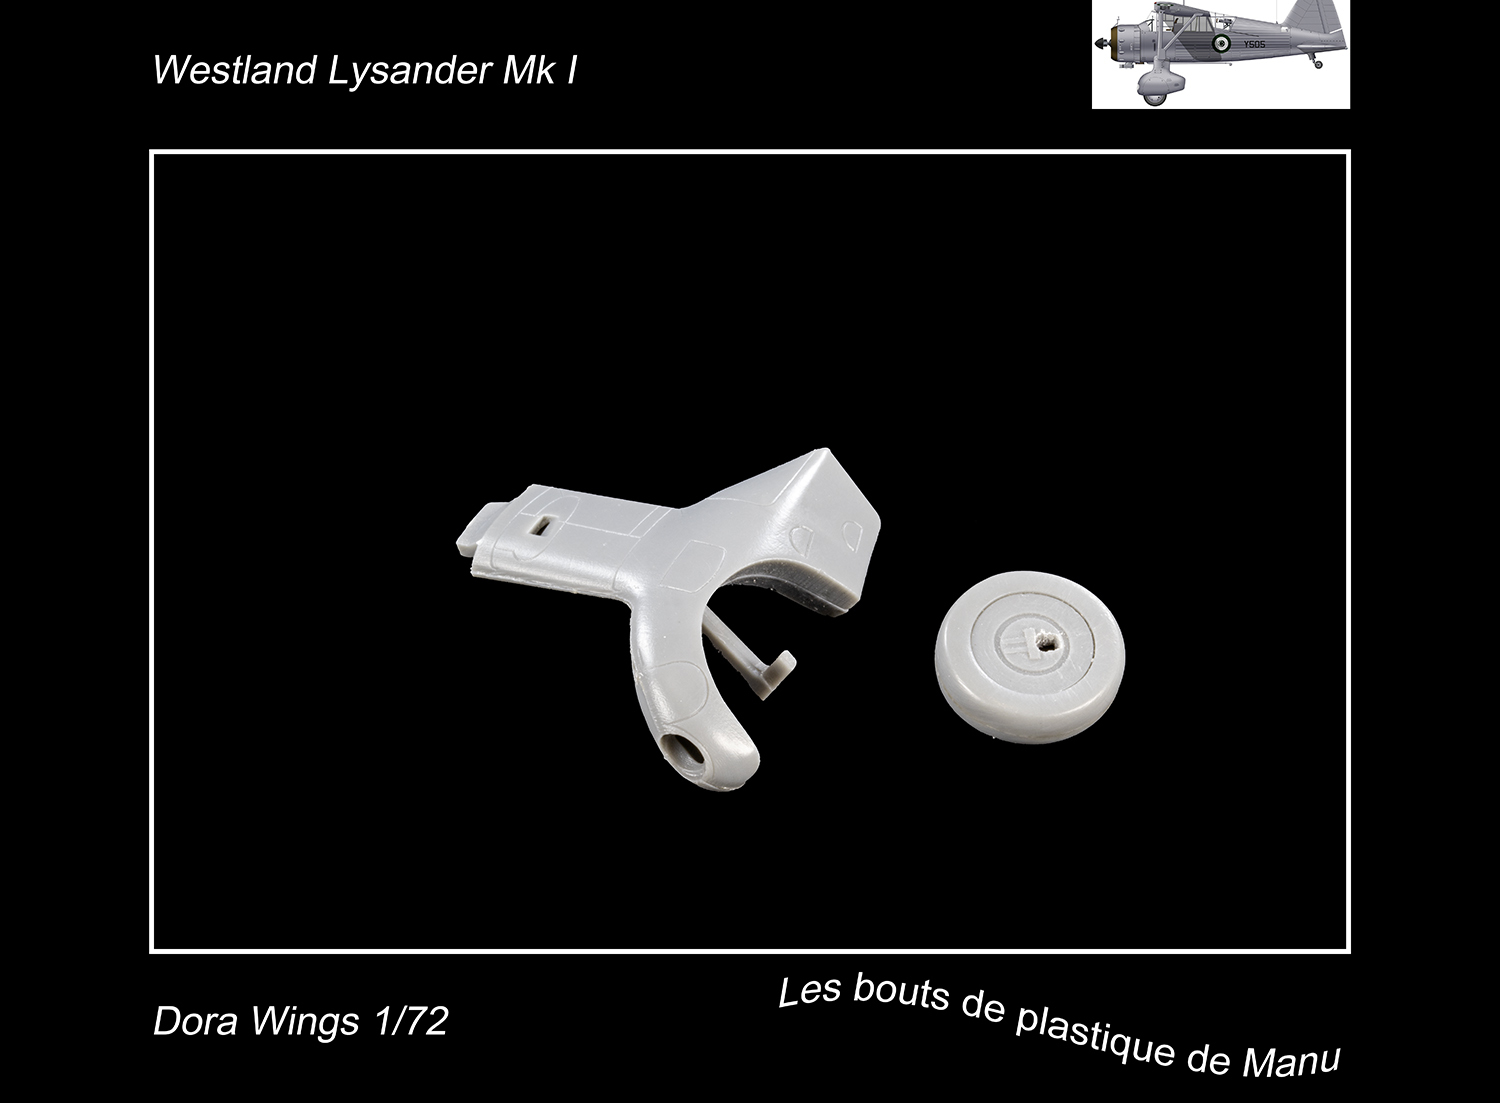 [Dora Wings] Westland Lysander Mk I - Je préfère en rire... - Page 2 Y0rn